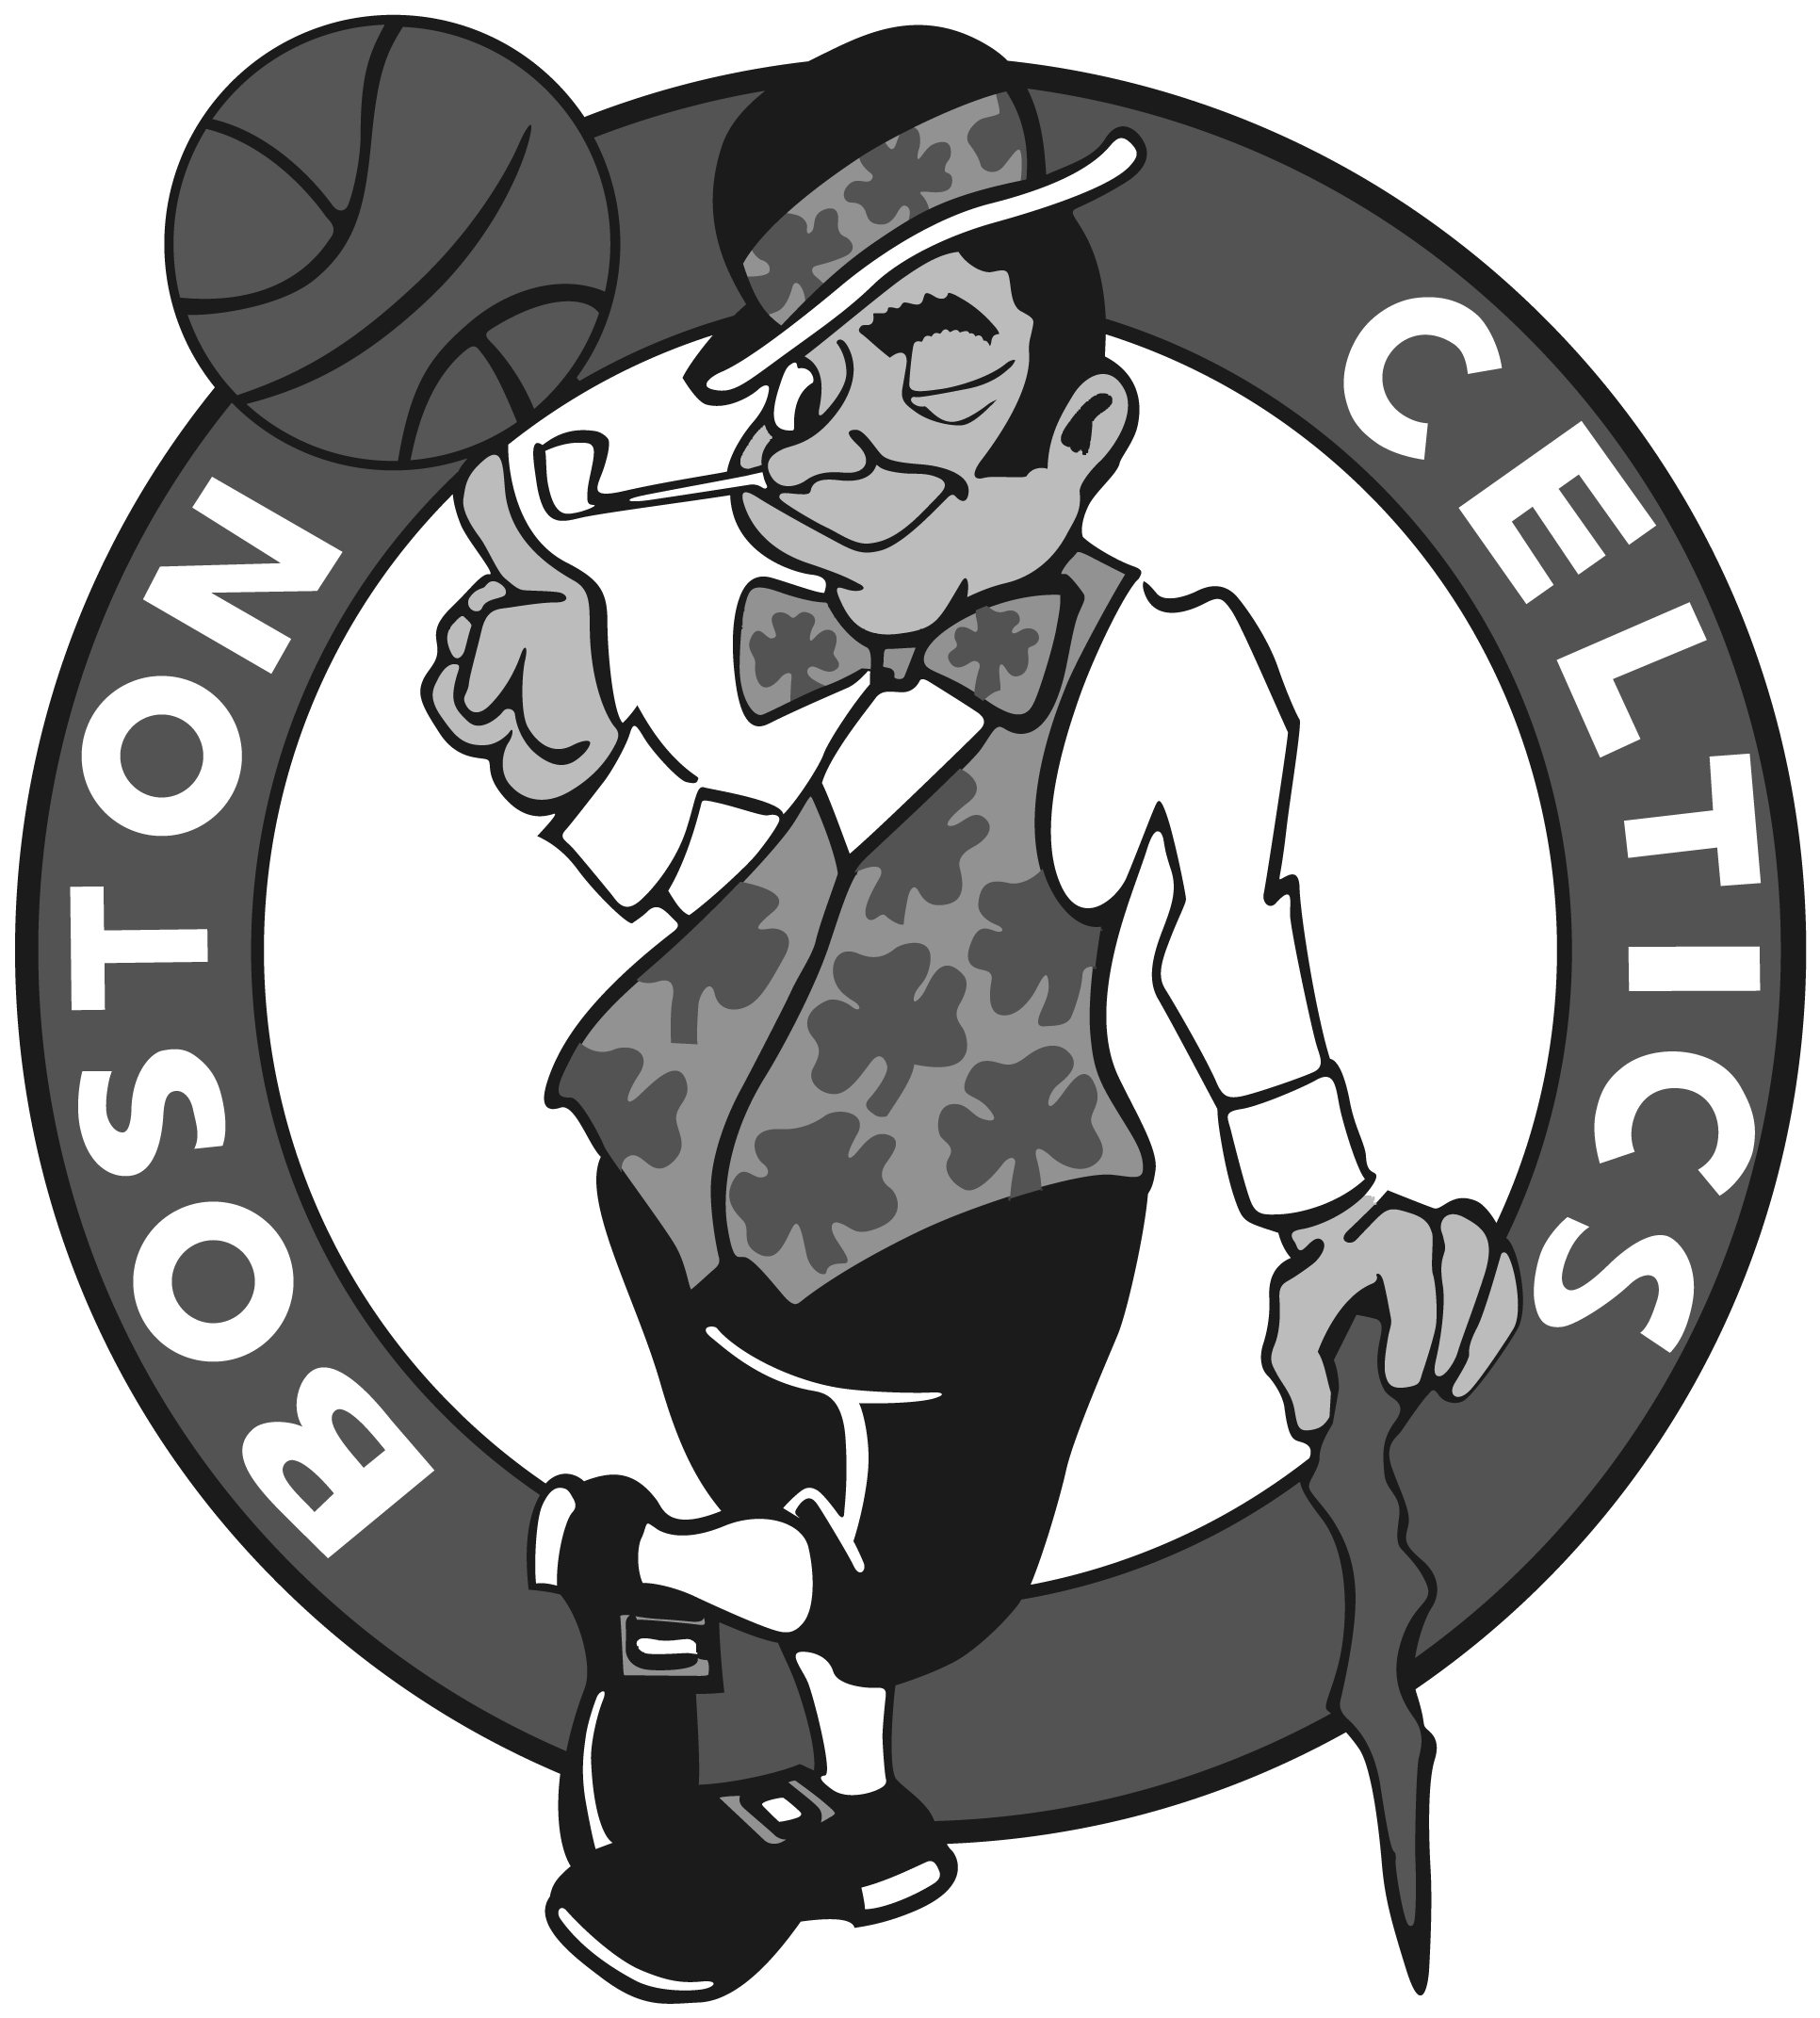 Boston Celtics Symbol - Fathead Nba Logo Wall Decal; Boston Celtics (3840x2160)